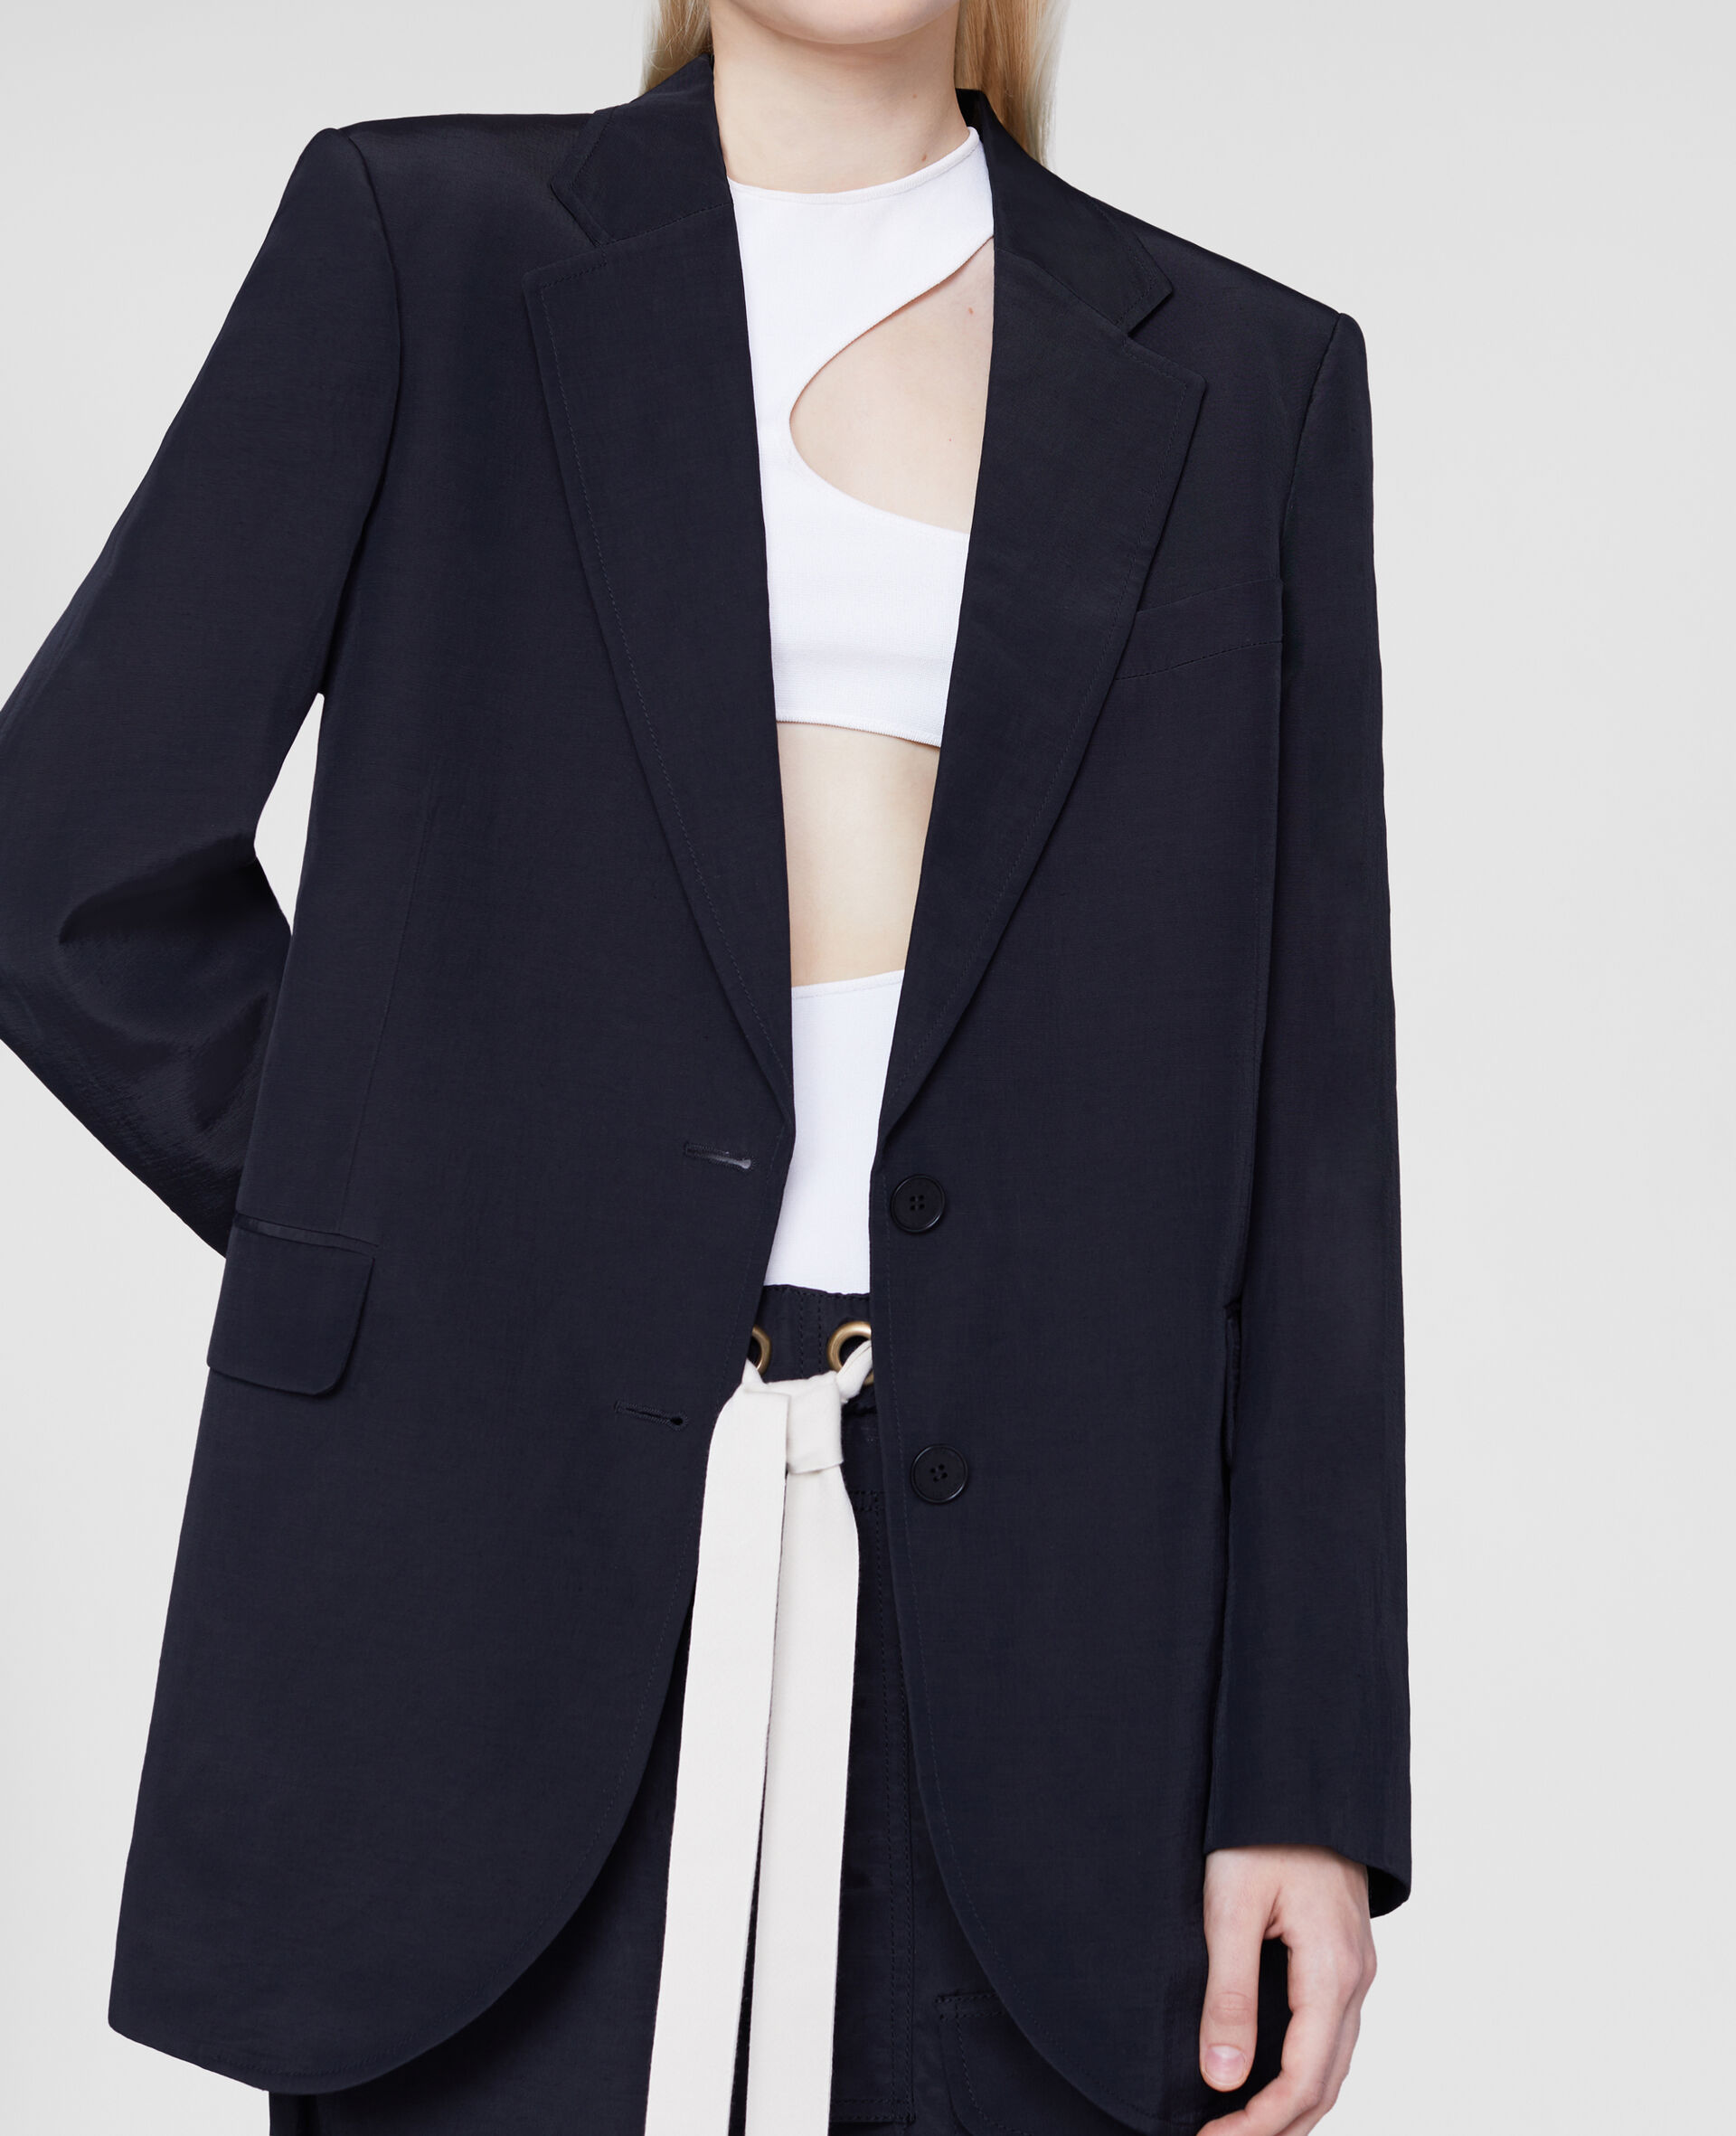 Tailored Twill Jacket-Black-large image number 3